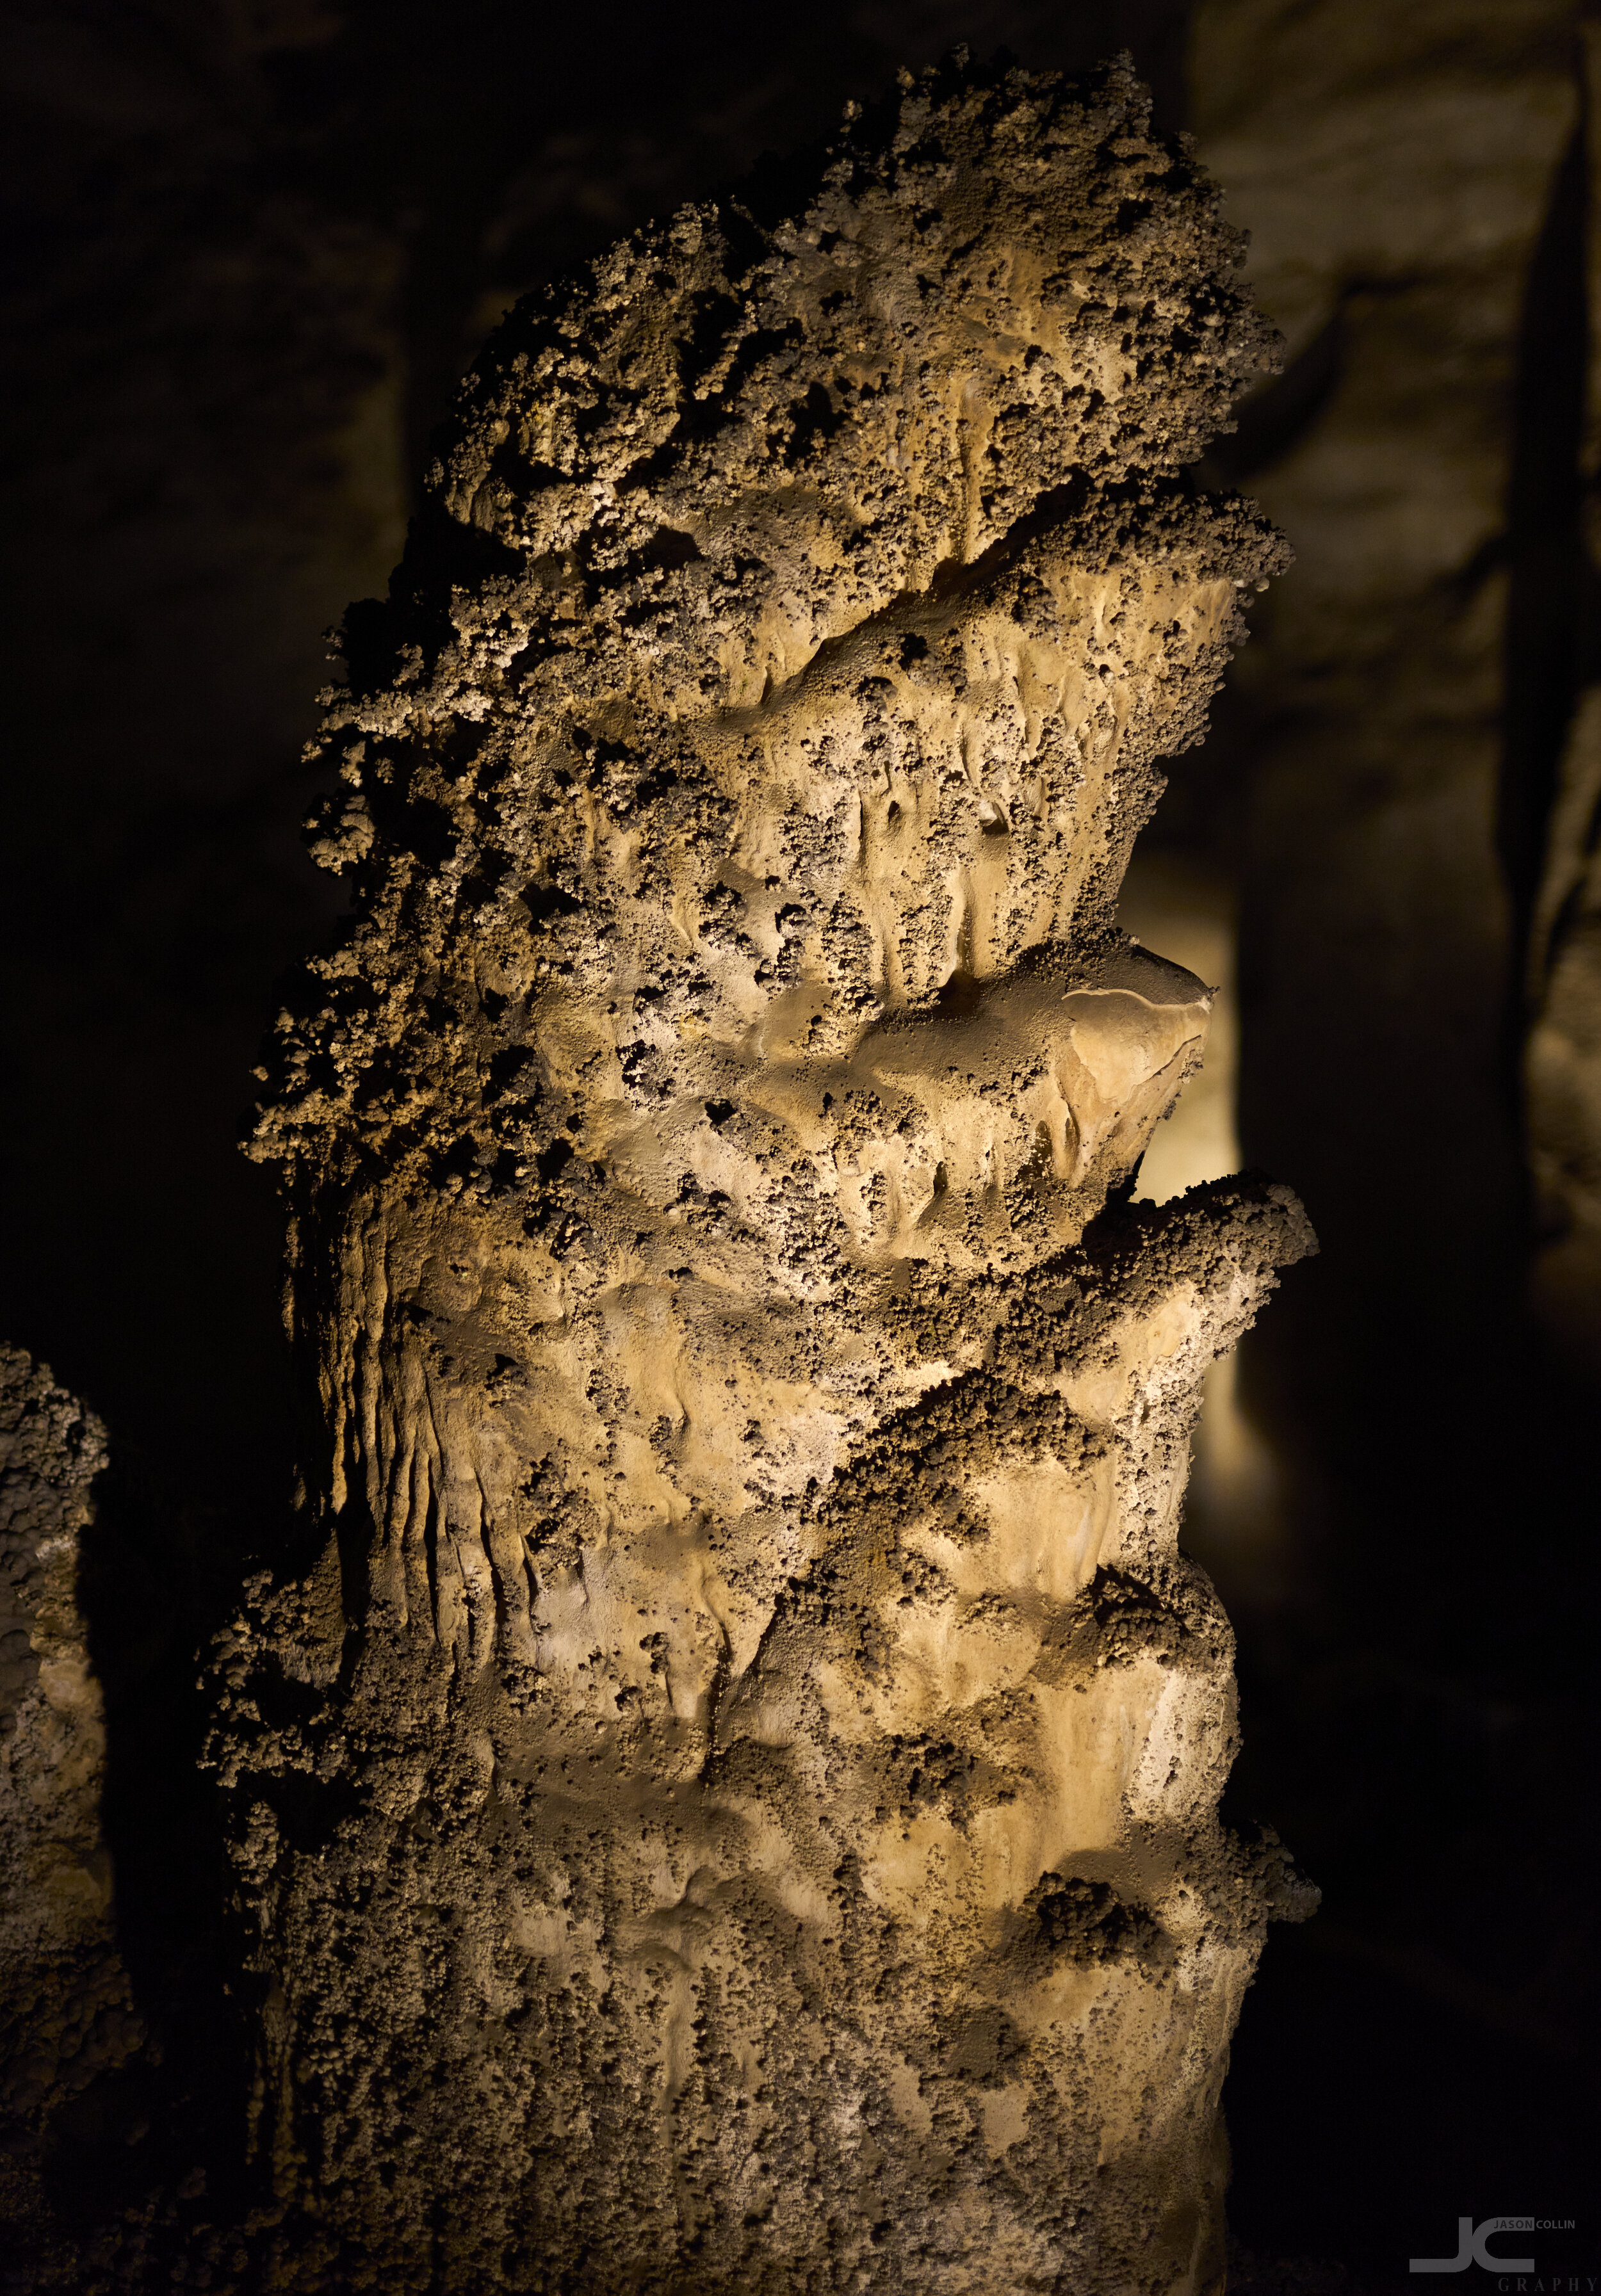 carlsbad-caverns-7-10-2021-nm-23519.jpg